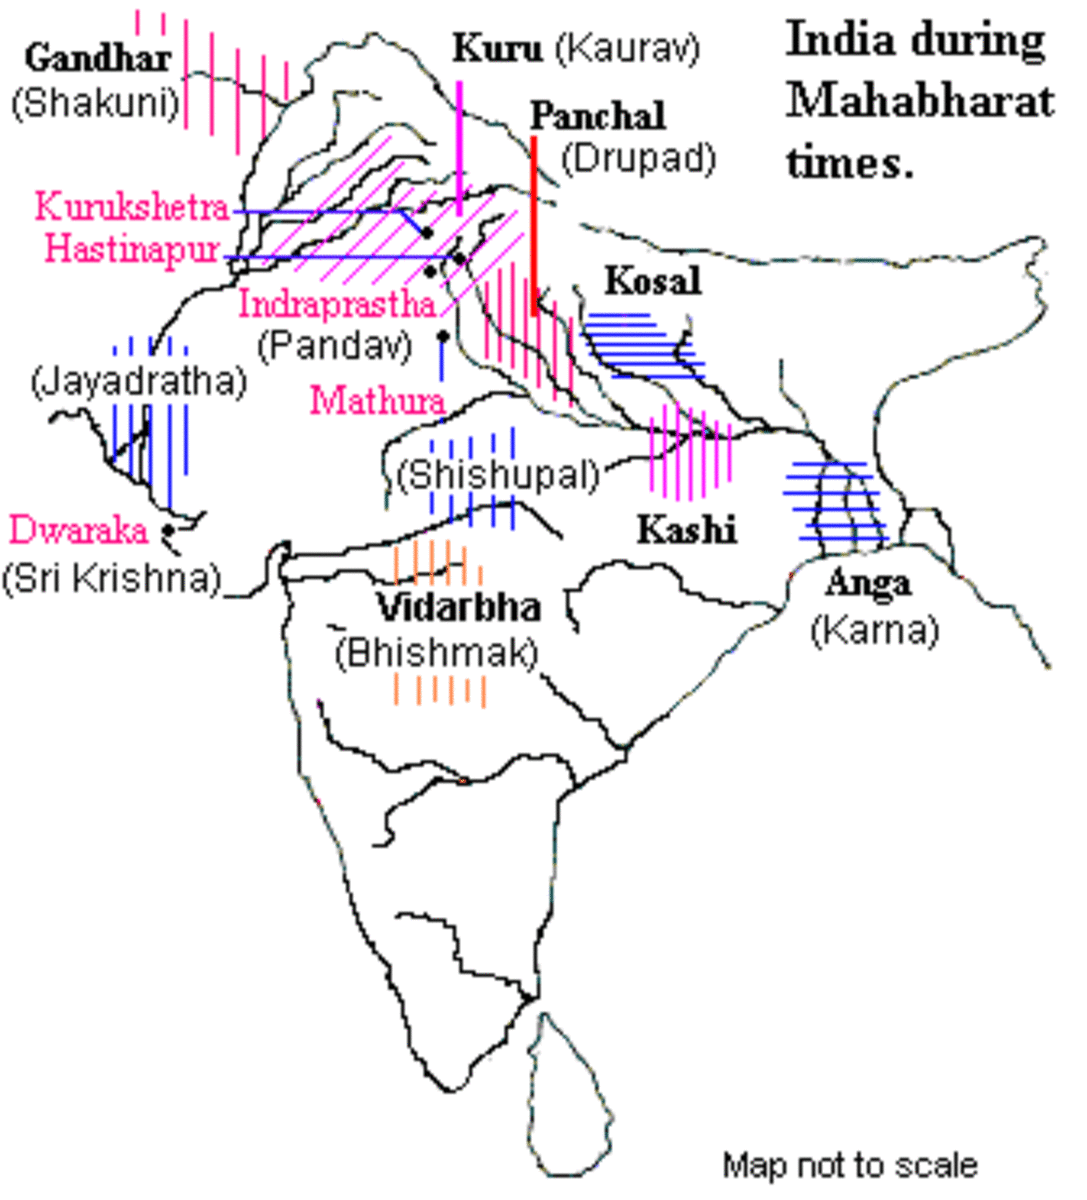 mahabharat-the-longest-epic-saga